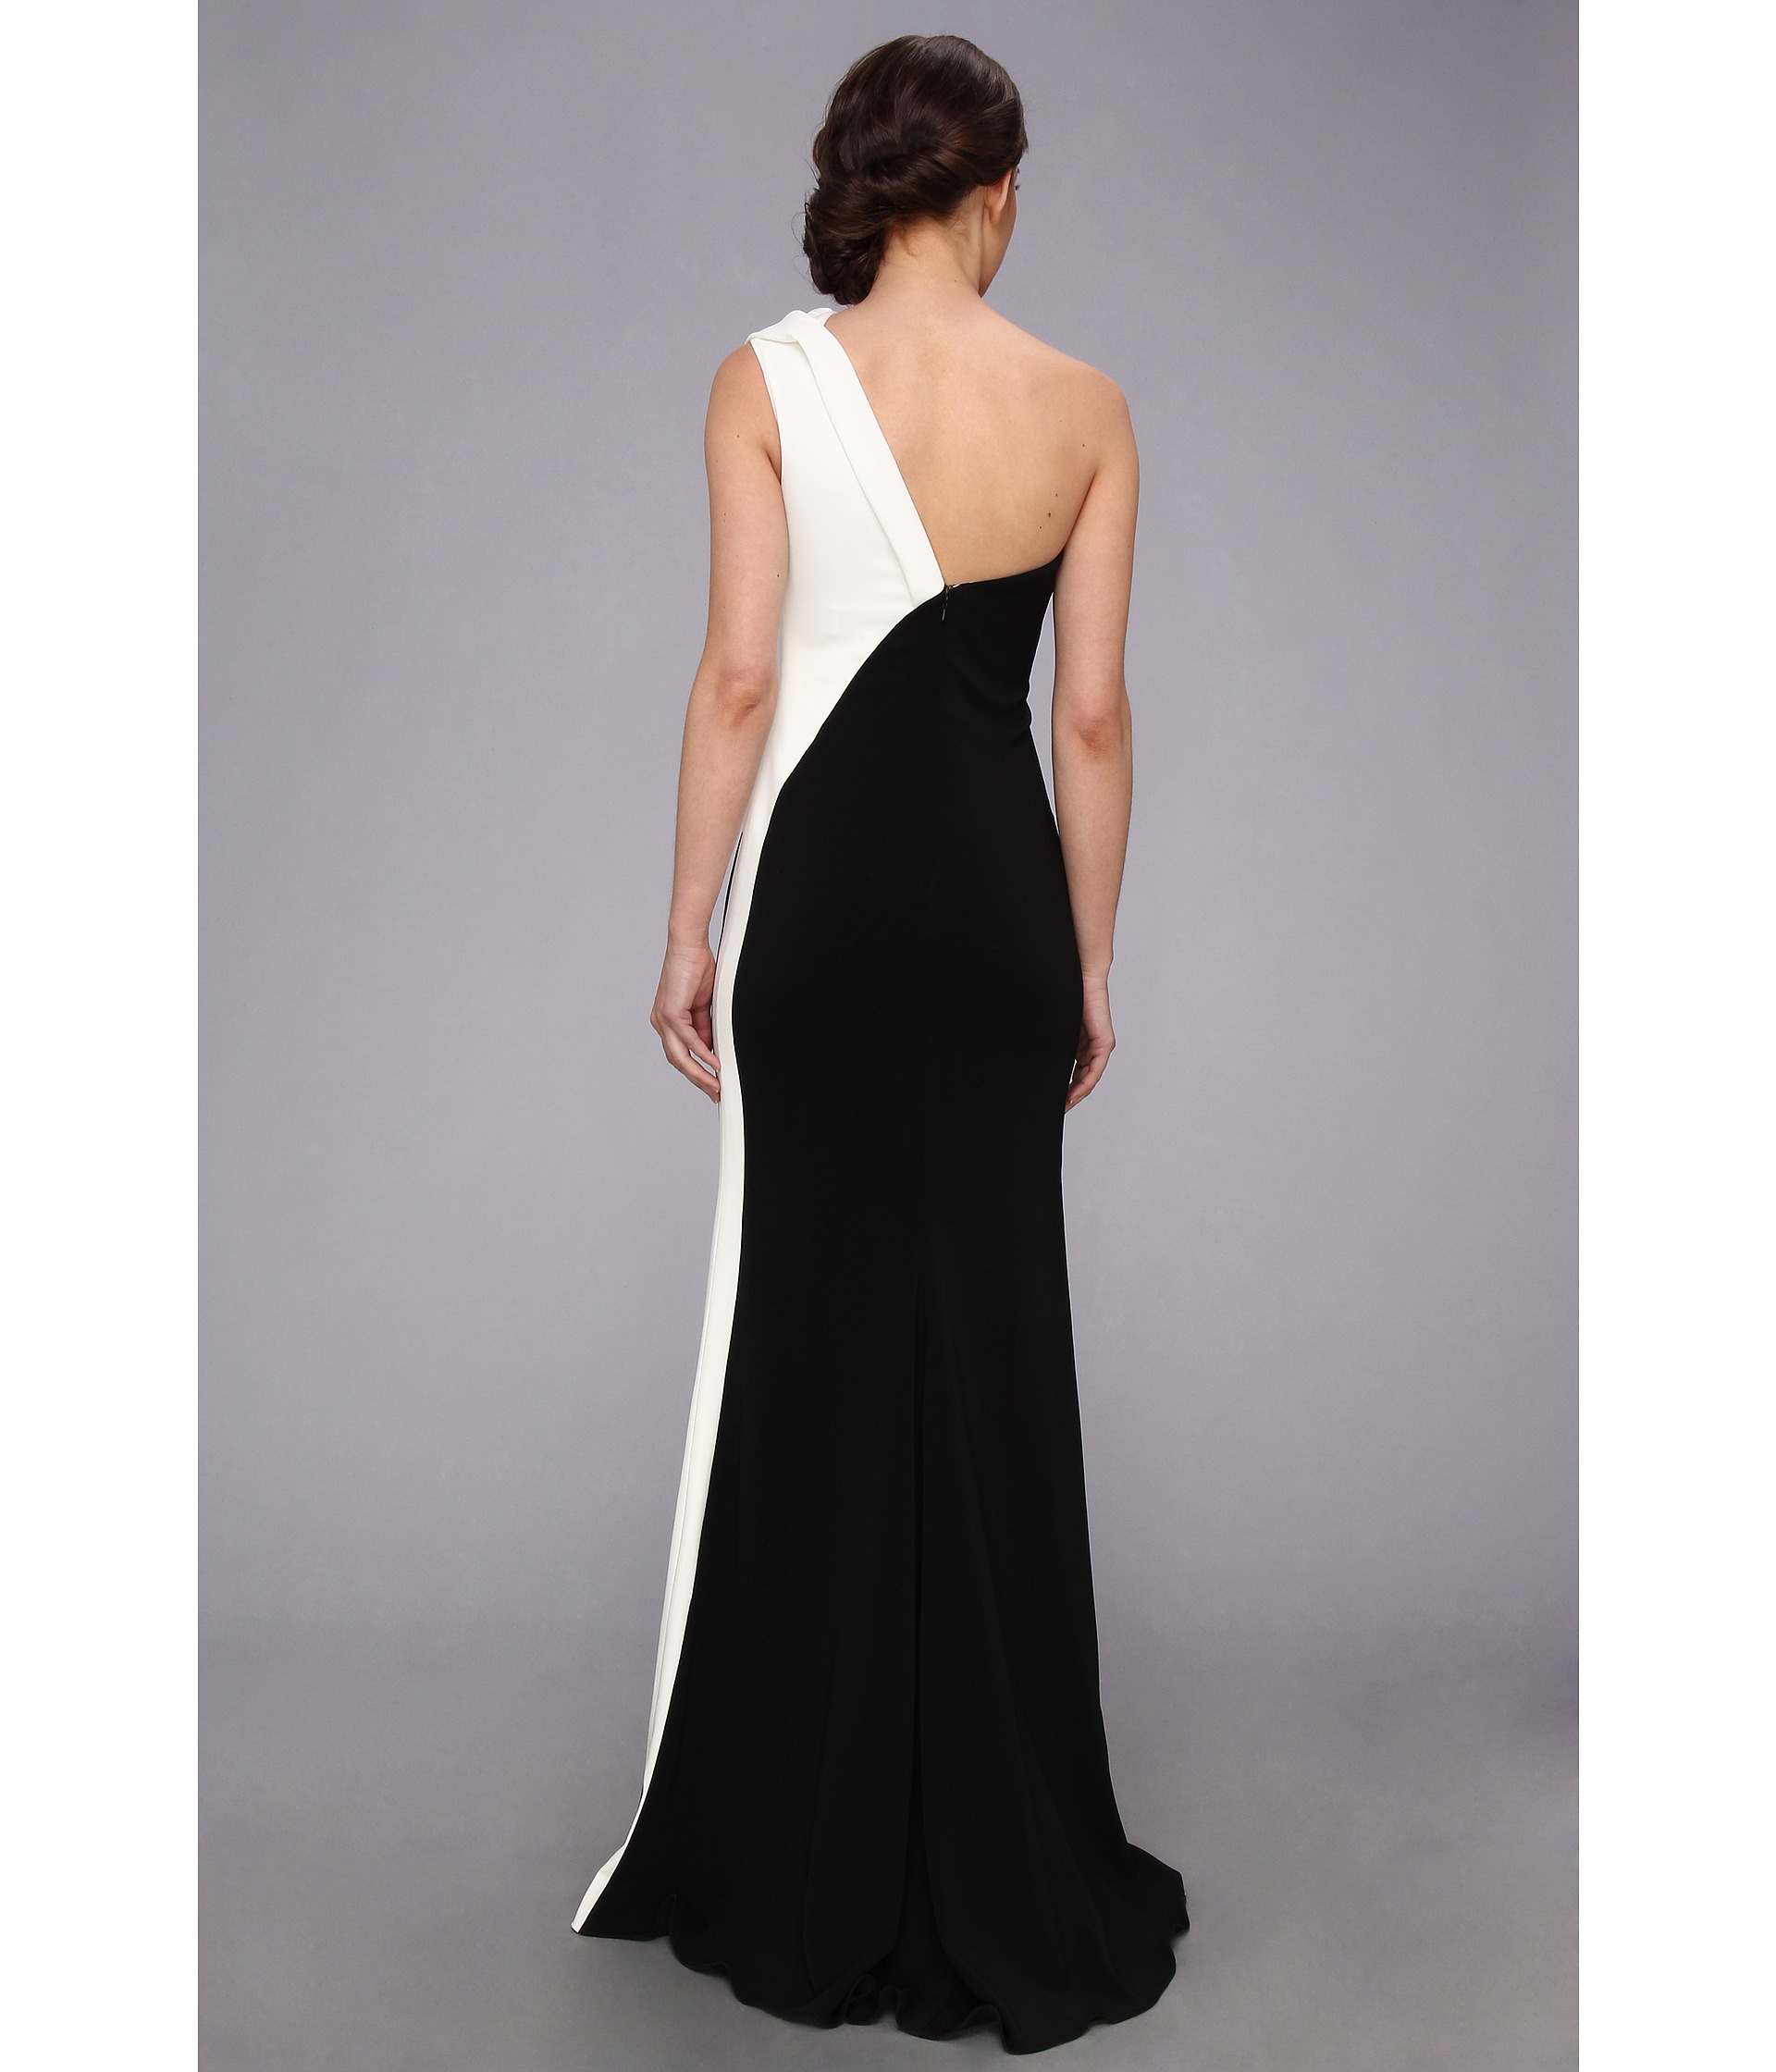 Badgley Mischka One Shoulder Color Block Gown Black/White